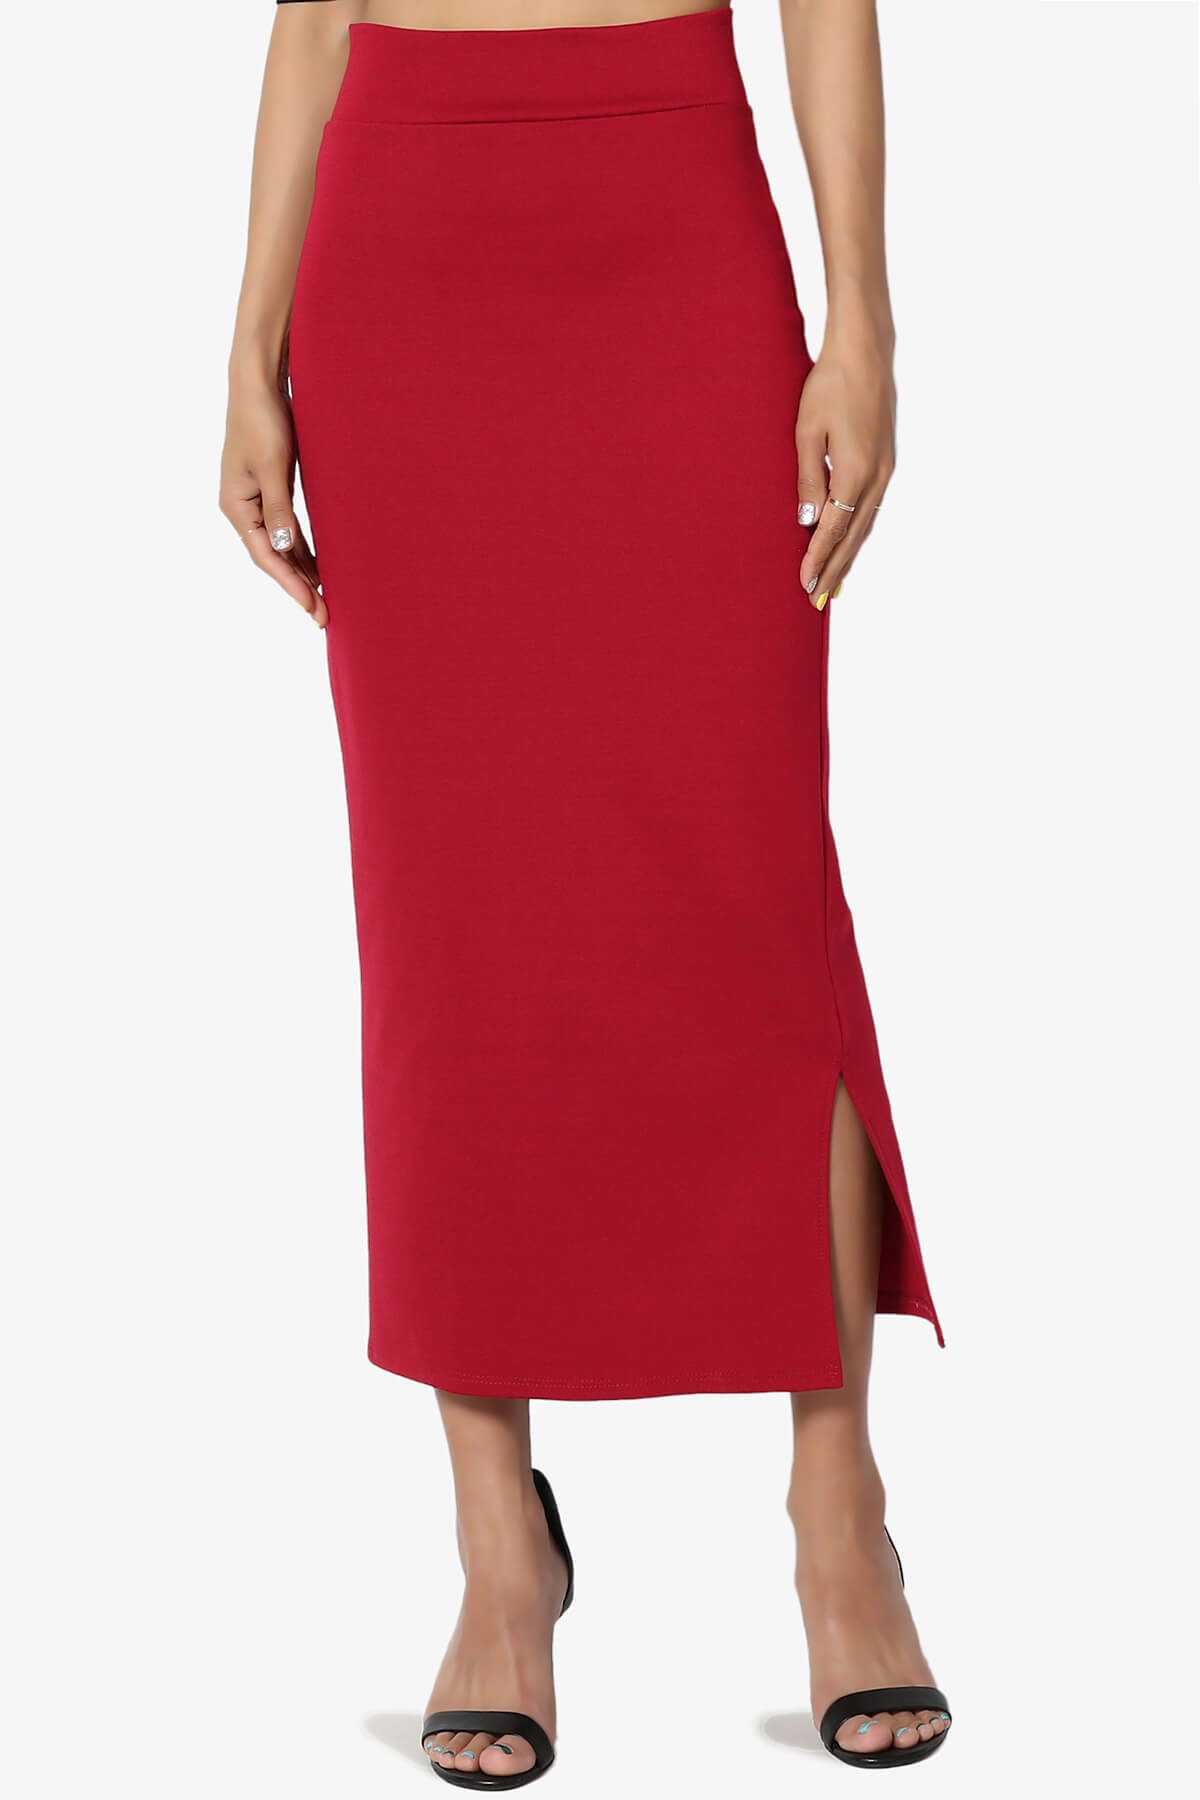 Carleta Mid Calf Pencil Skirt RED_1